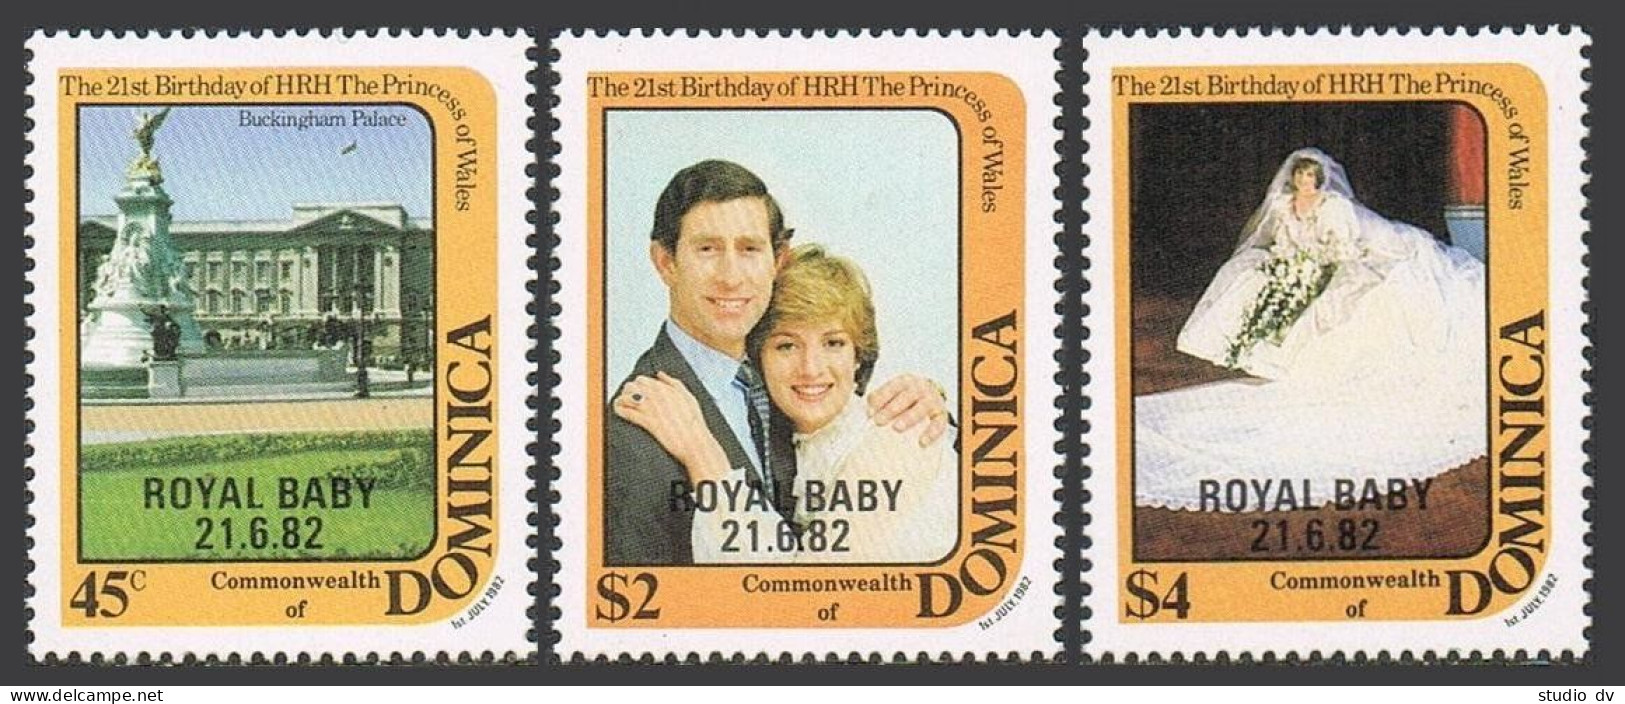 Dominica 782-784,MNH.Michel 796-798. Princess Diana-Royal Baby,1982.Palace. - Dominica (1978-...)